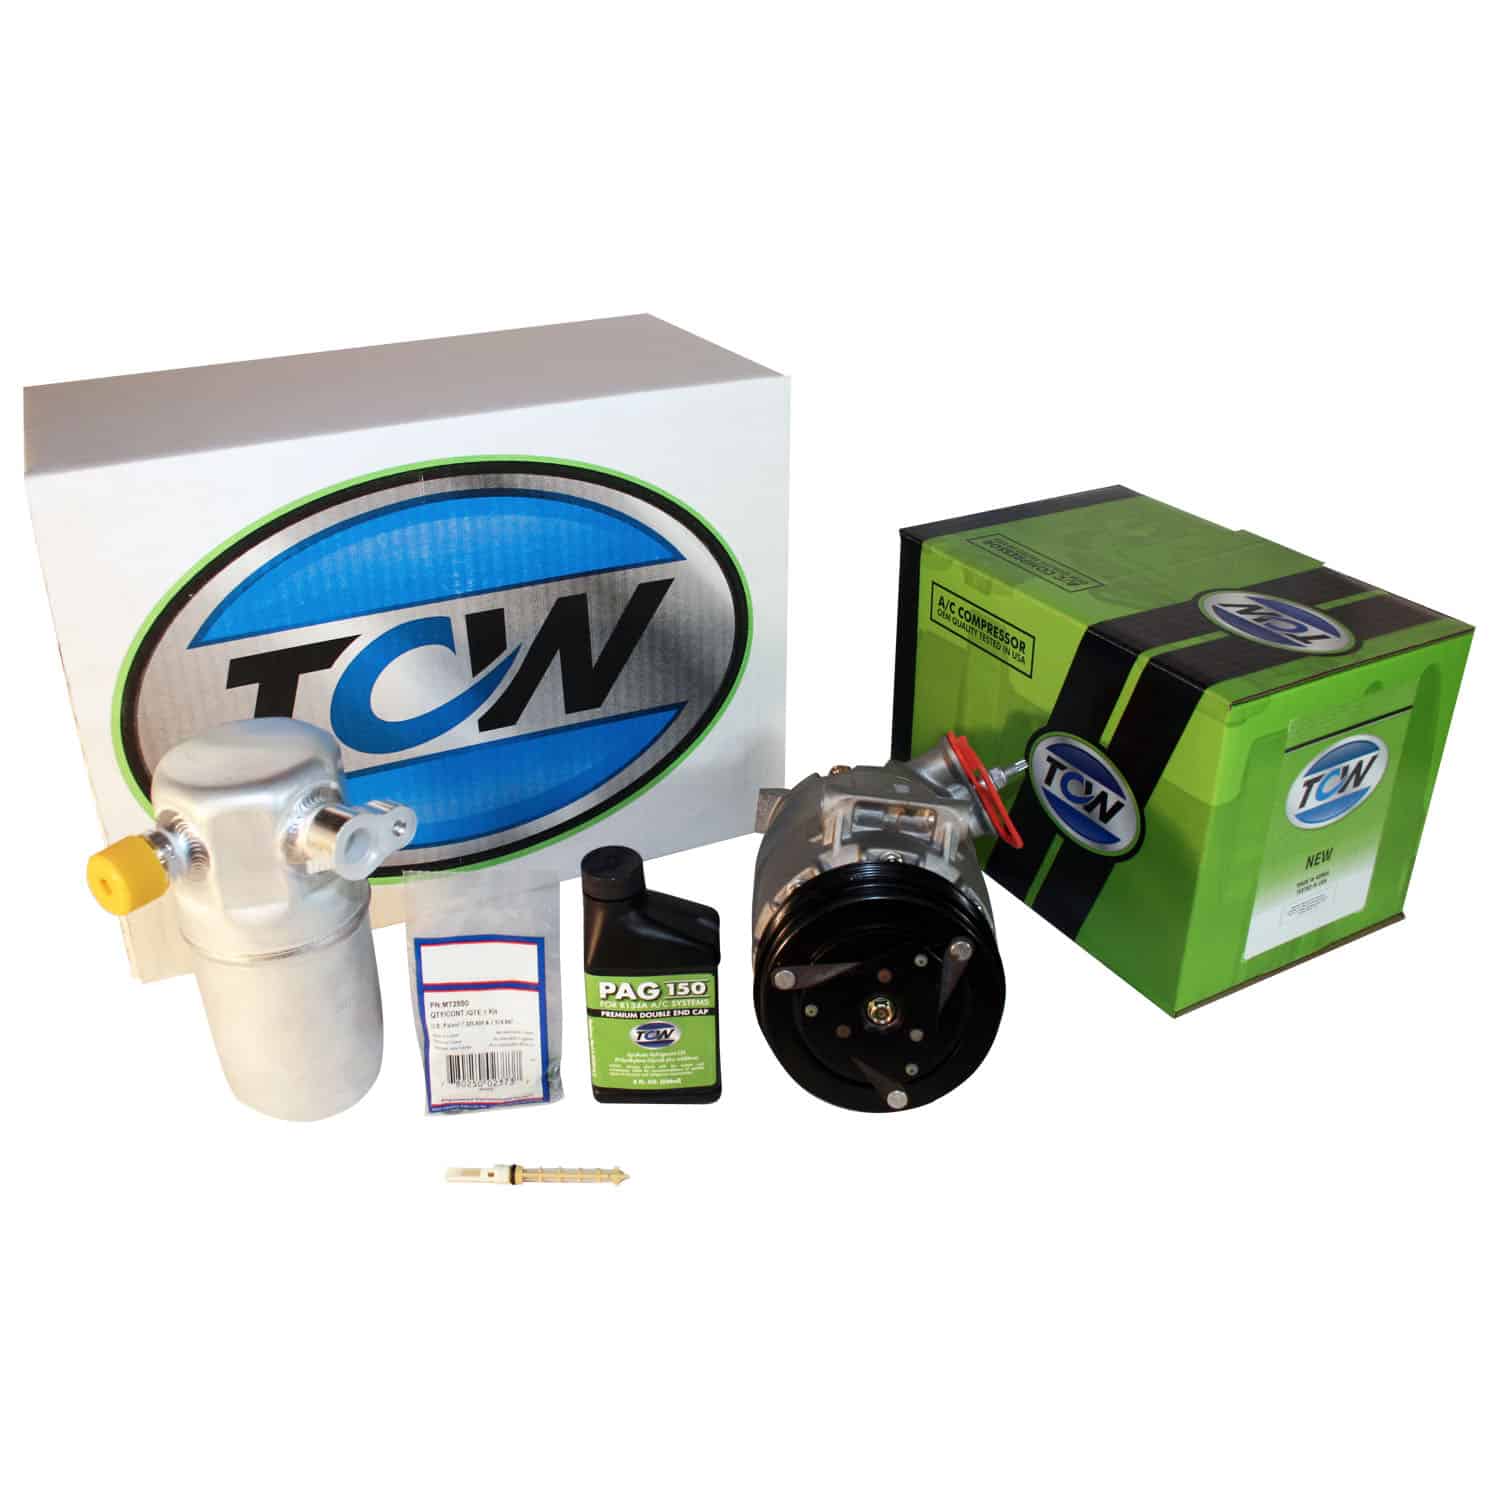 TCW Vehicle A/C Kit K1000224N New Product Image field_60b6a13a6e67c